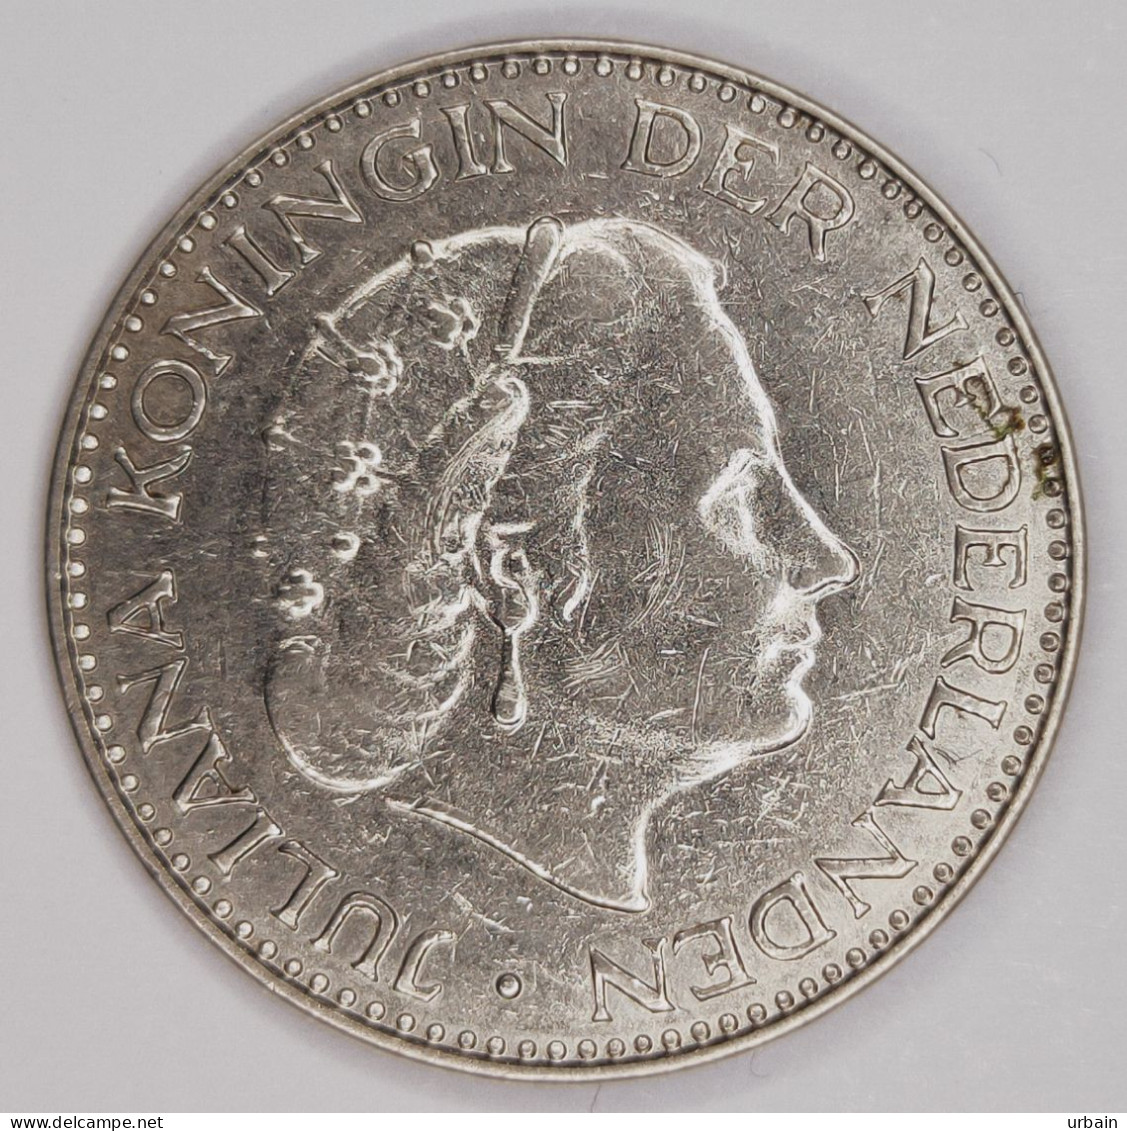 Lot 9 coins - NETHERLANDS - 1965 to 1980 - Queen Juliana (1949 - 1980)